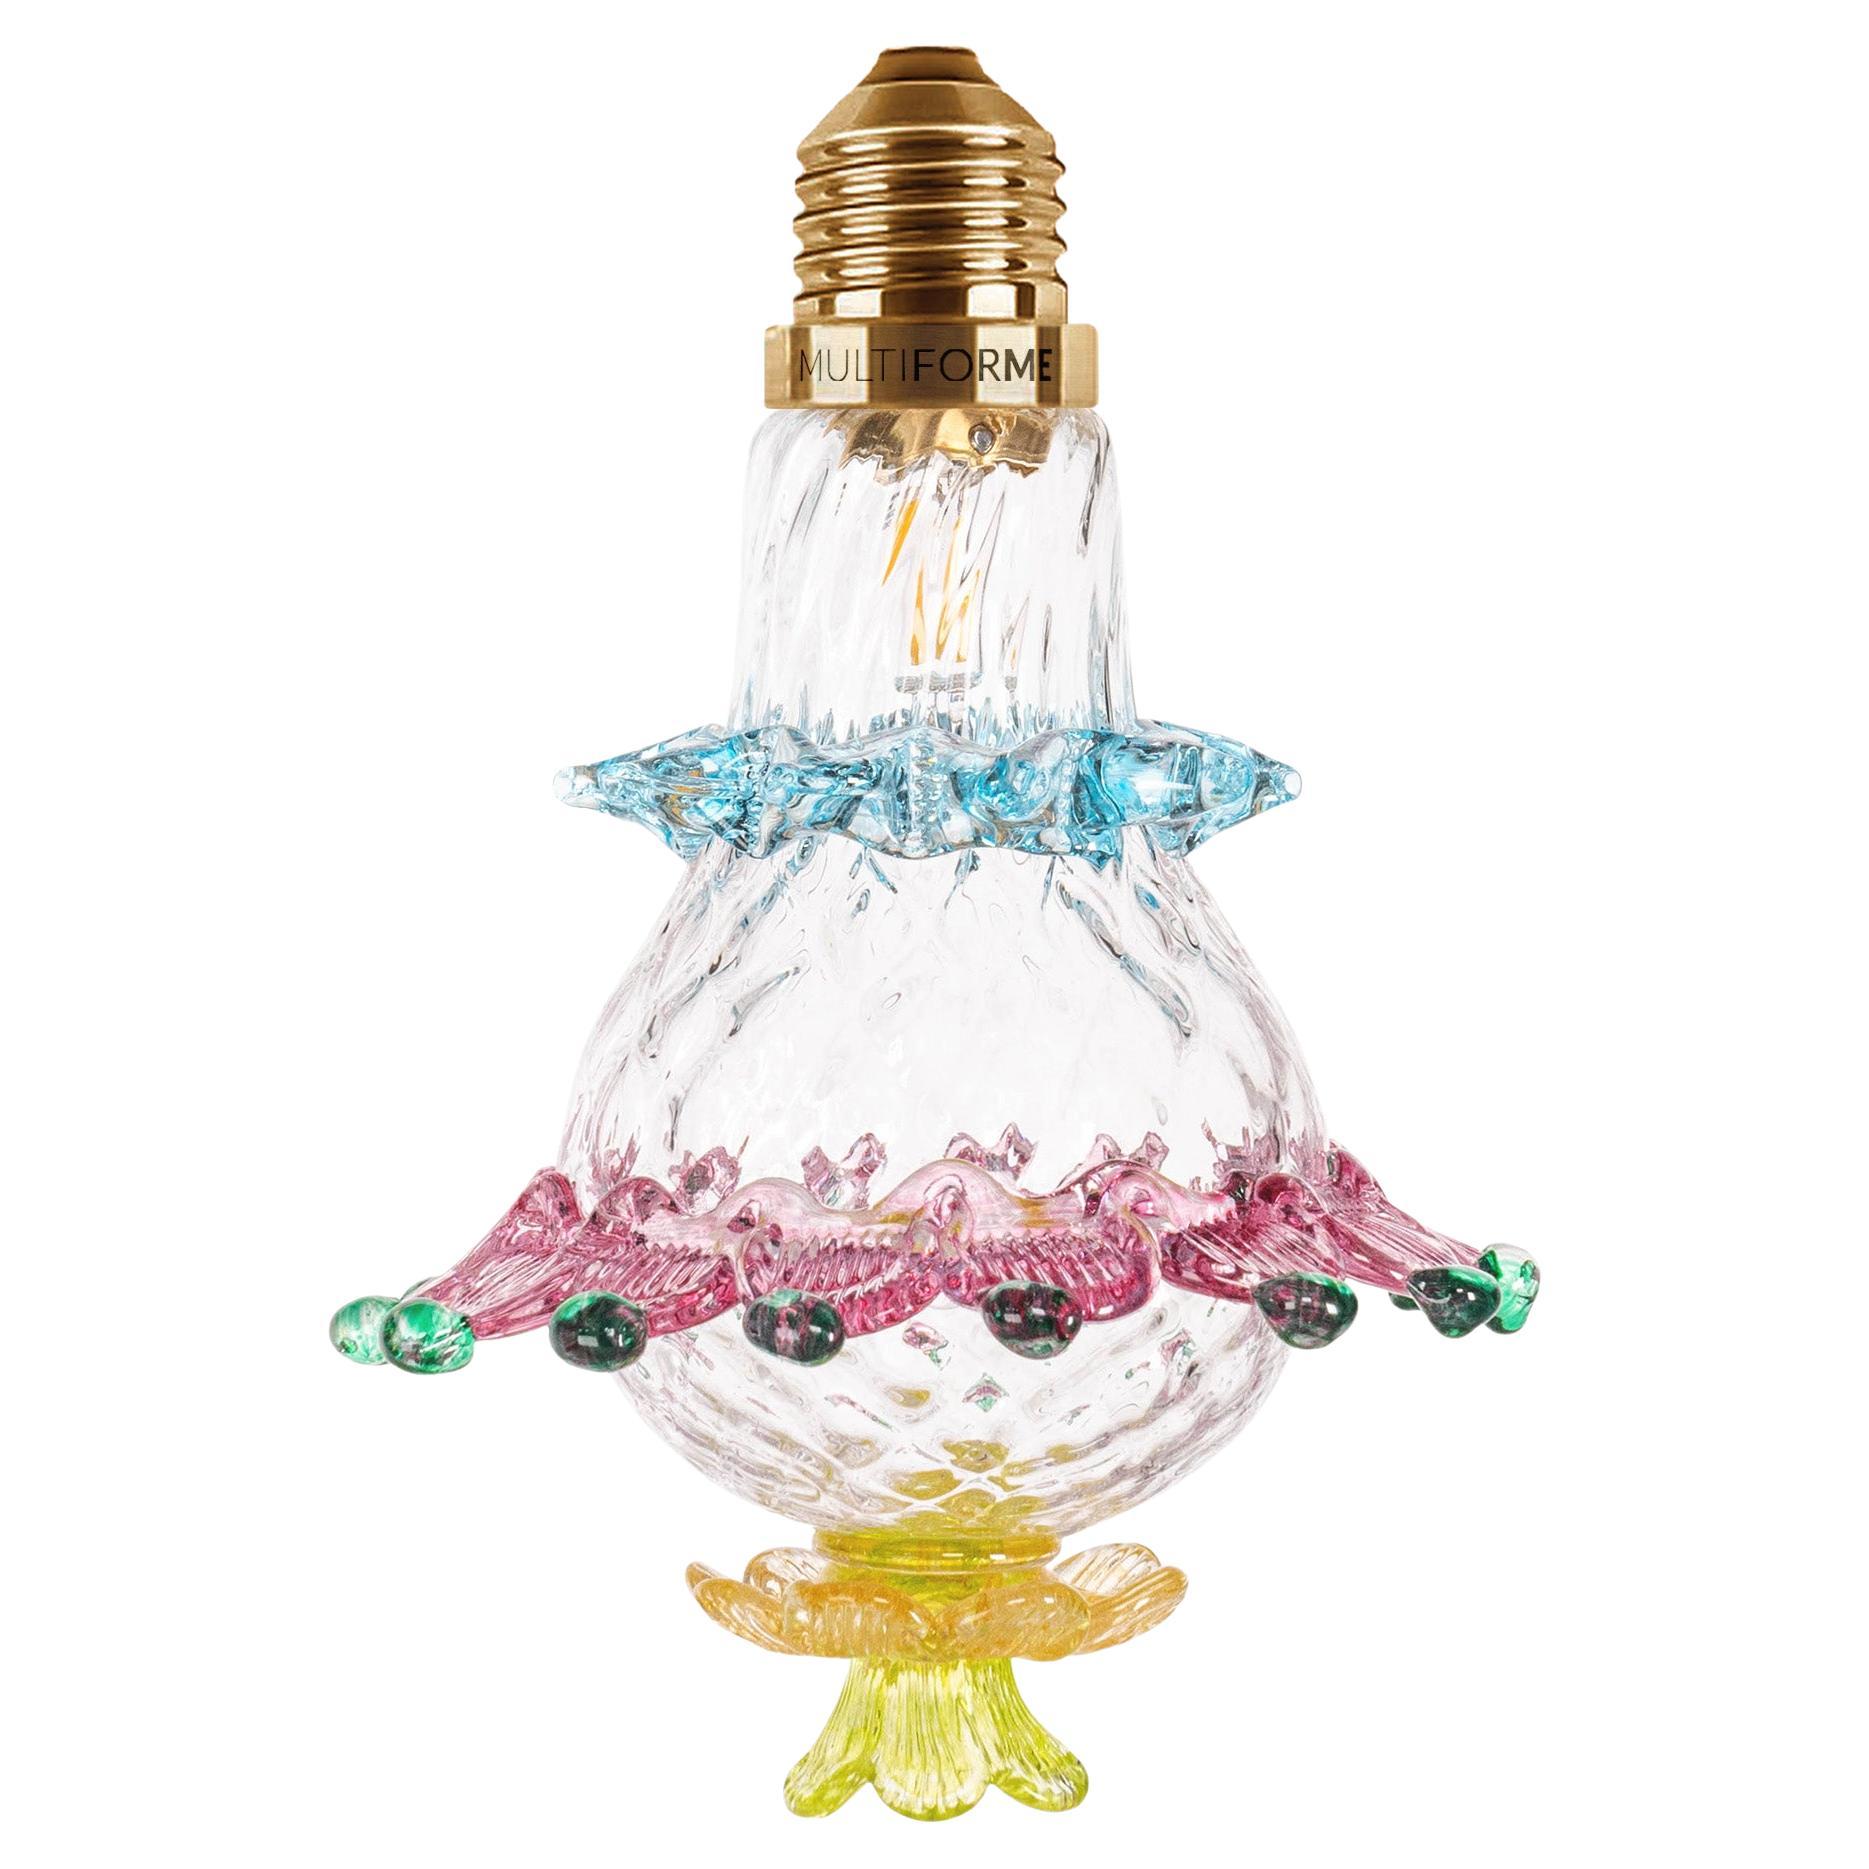 Artistic glass lightbulb chandelier Murano Bulb Marcantonio X Multiforme #01 For Sale